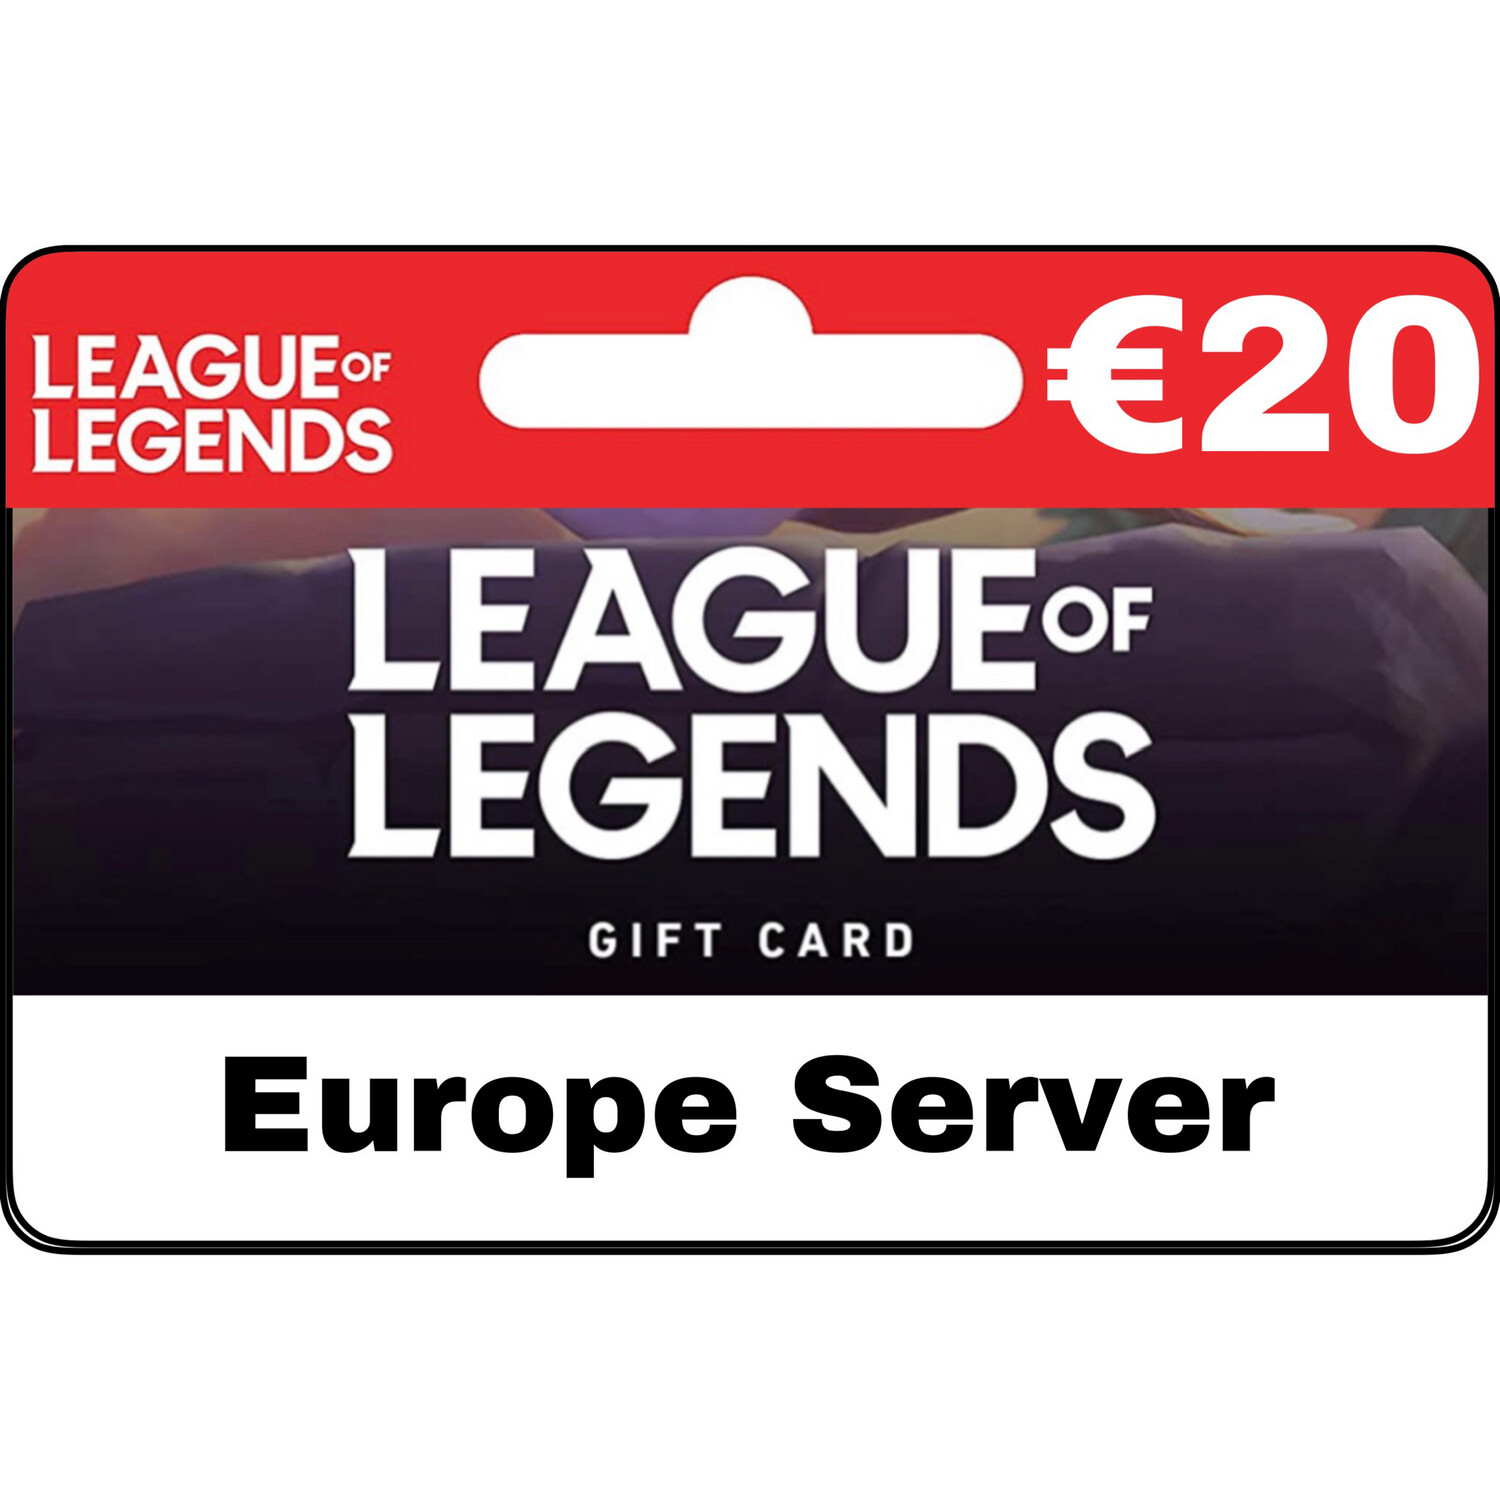 League of Legends EUR €20 Europe Server Gift Card